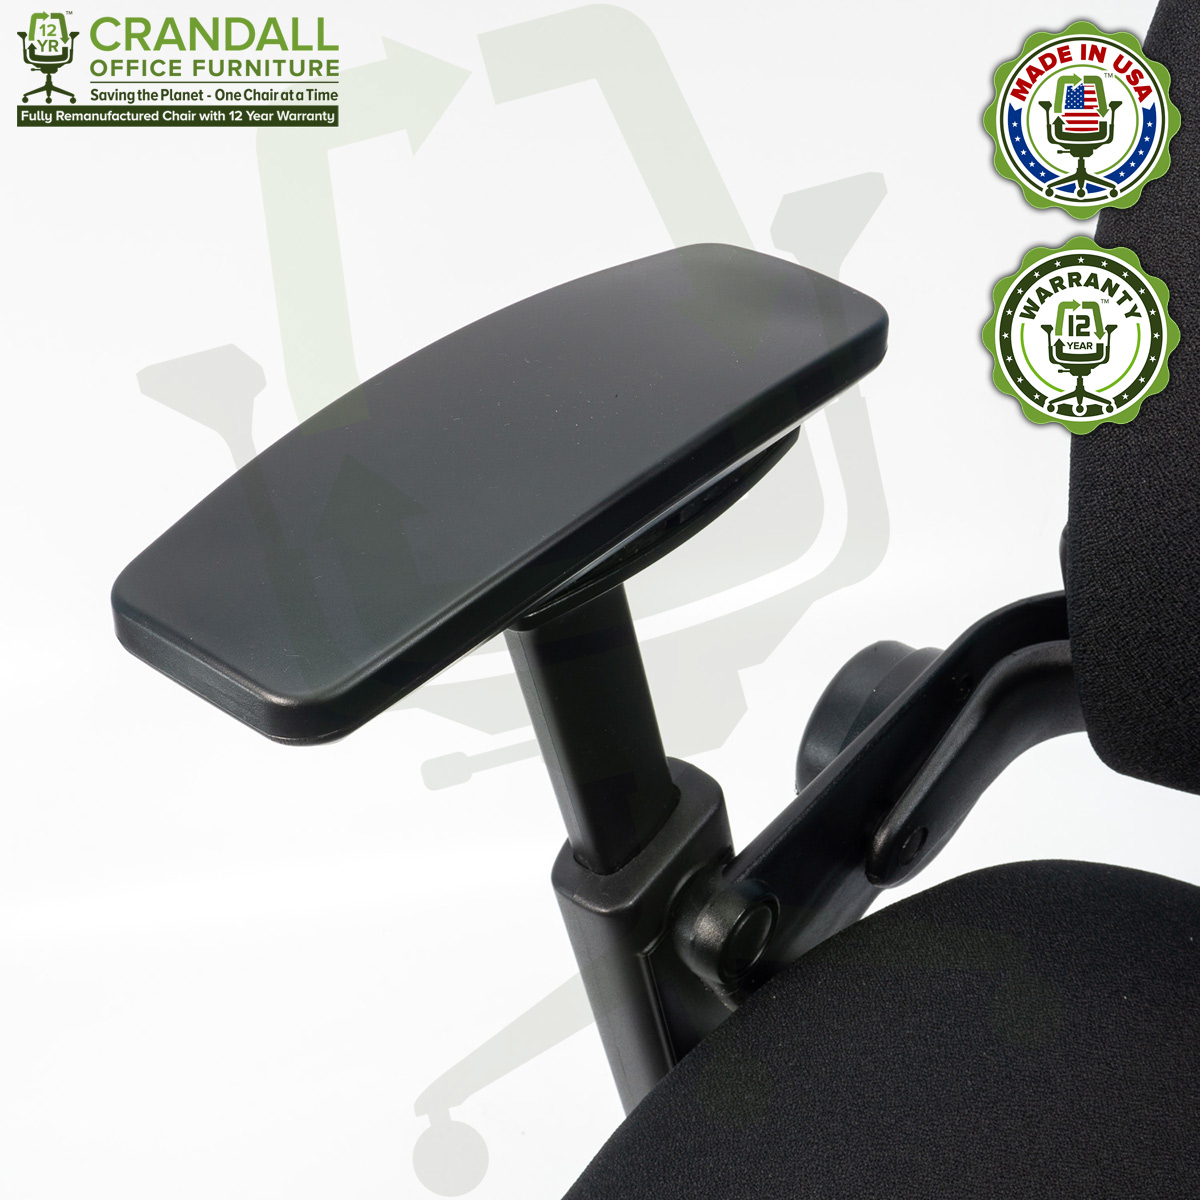 https://www.crandalloffice.com/wp-content/uploads/2019/06/Crandall-Office-Remanufactured-Steelcase-462-V2-Leap-Chair-06.jpg